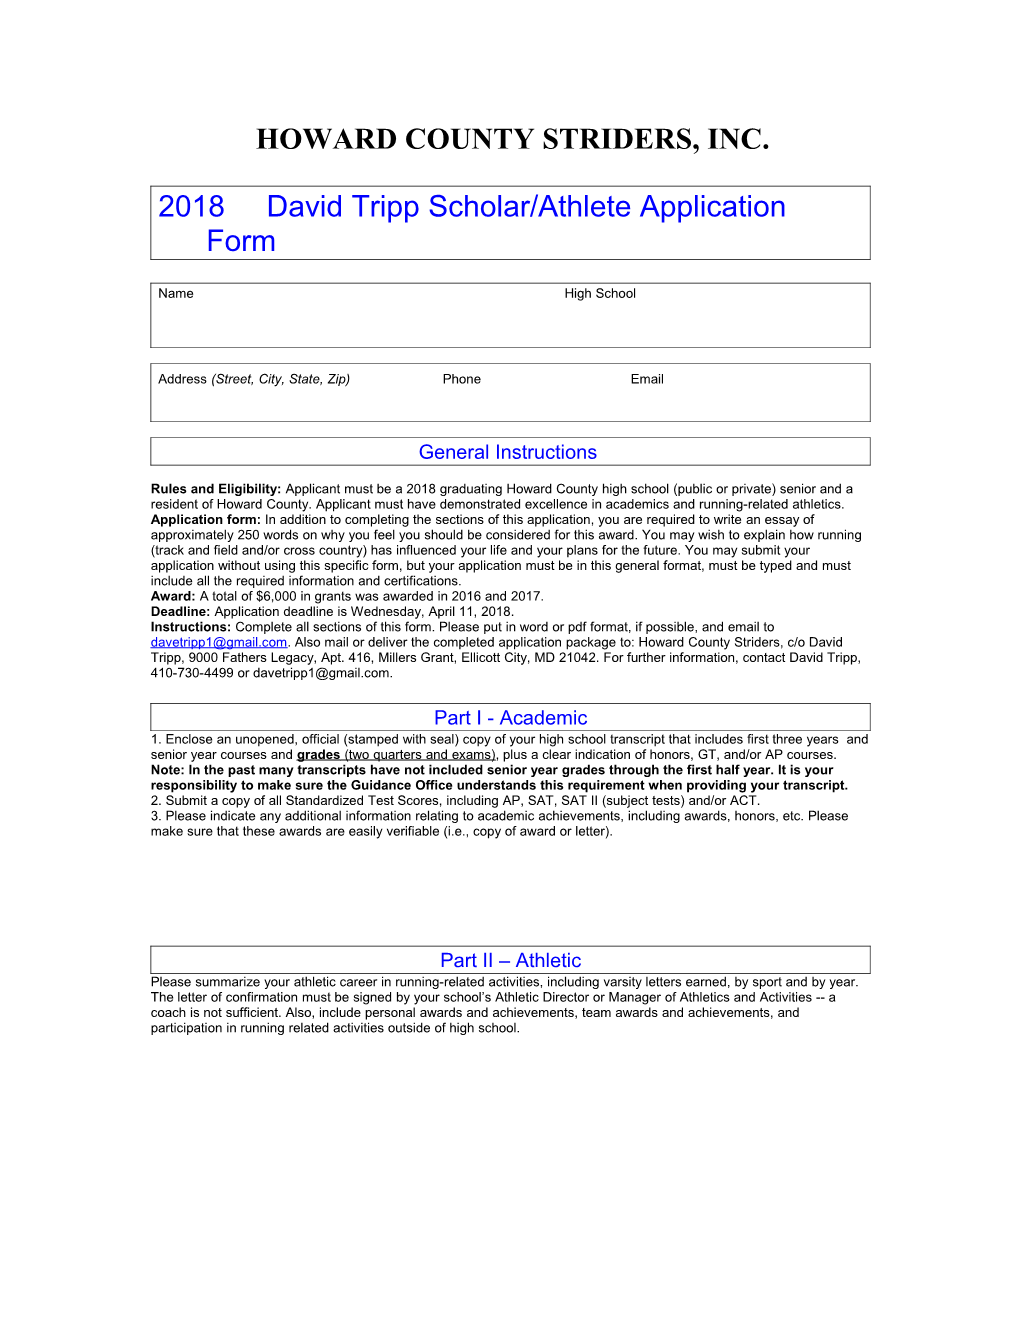 2018 David Tripp Scholar/Athlete Application Form